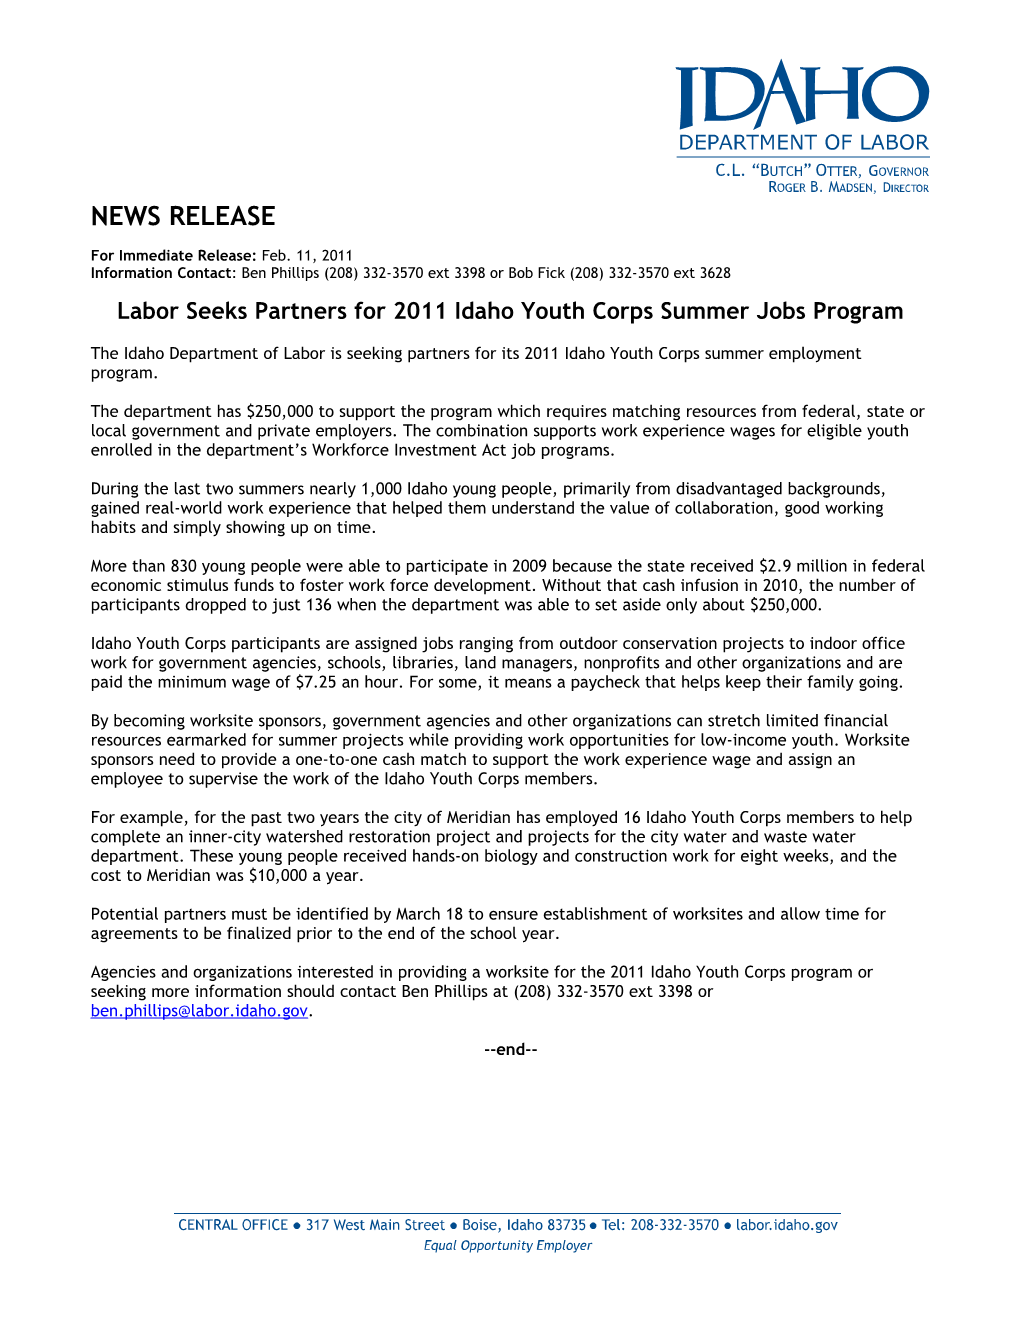 Labor Seeks Partners for 2011 Idaho Youth Corps Summer Jobs Program